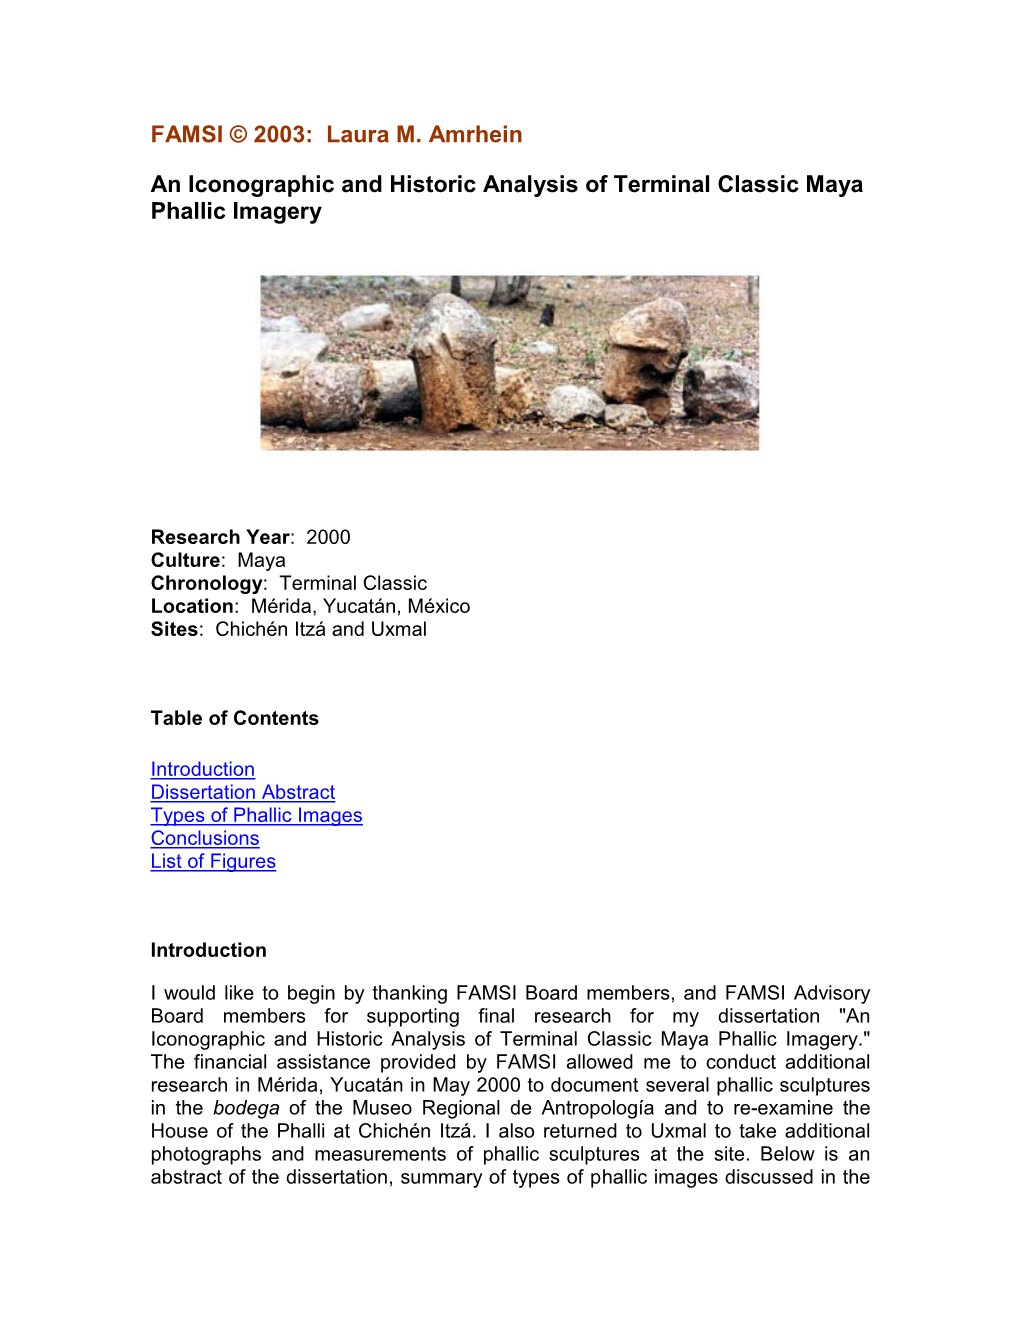 An Iconographic and Historic Analysis of Terminal Classic Maya Phallic Imagery